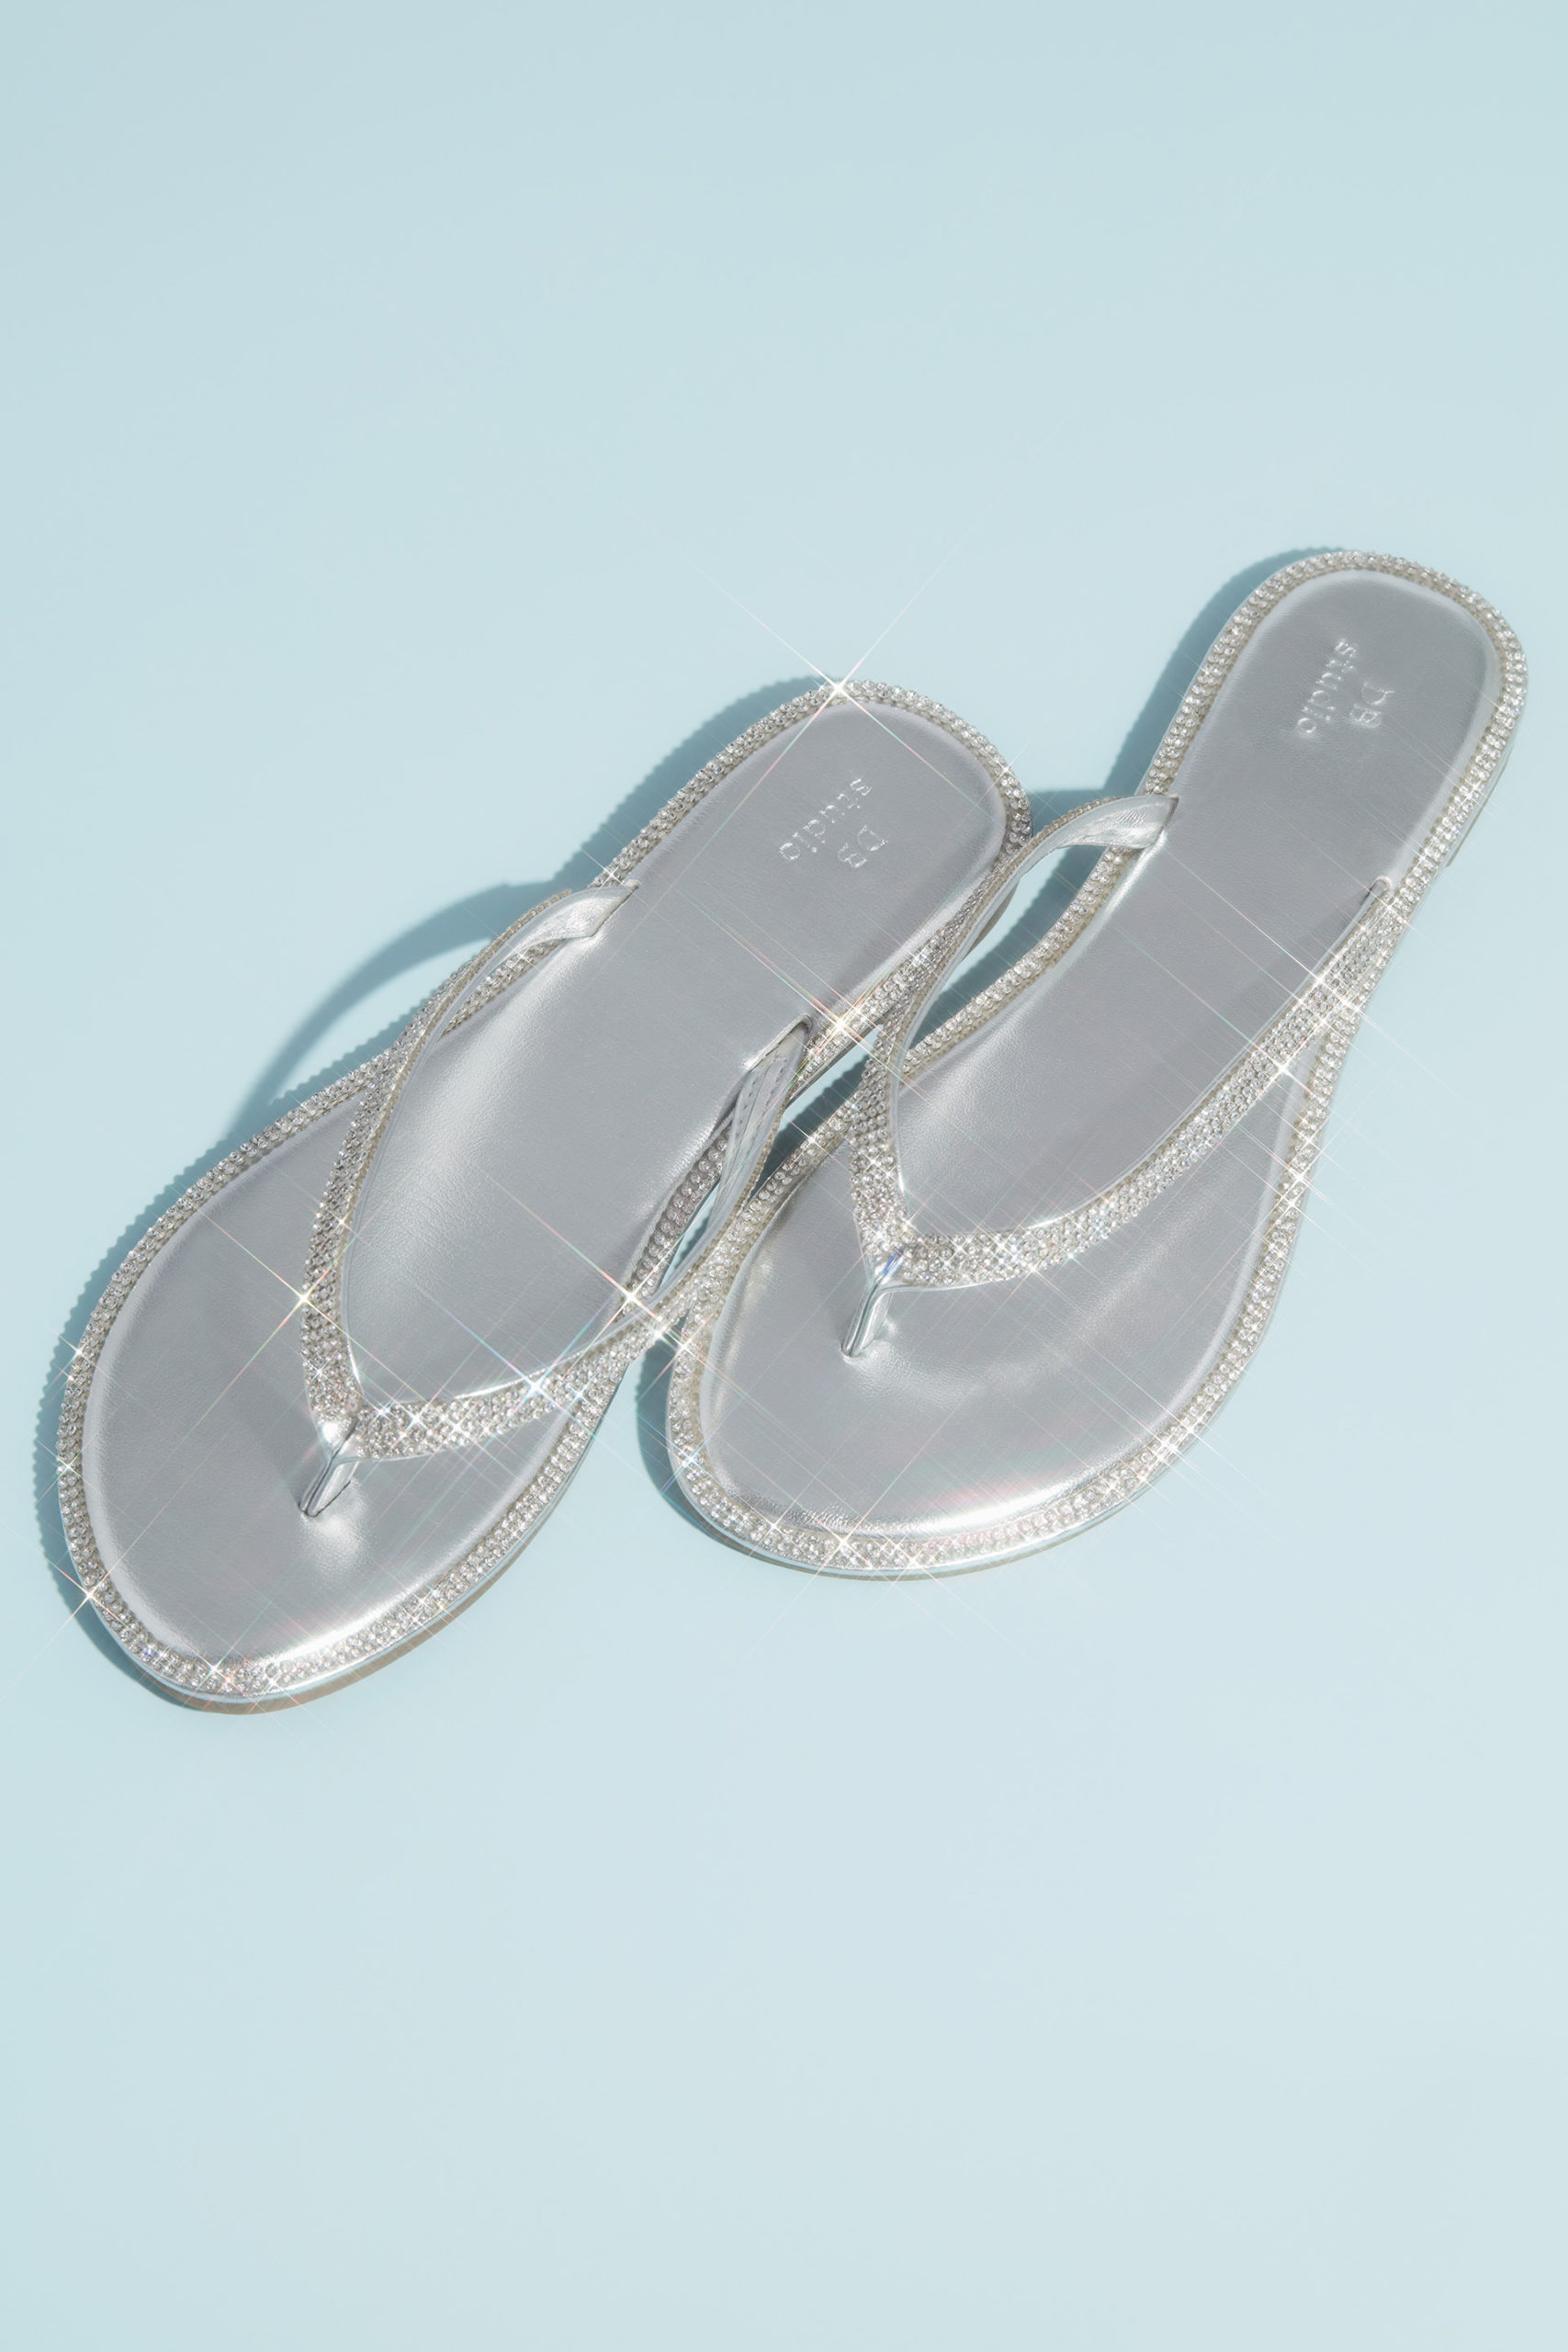 silver flip flops - outdoor wedding shoes